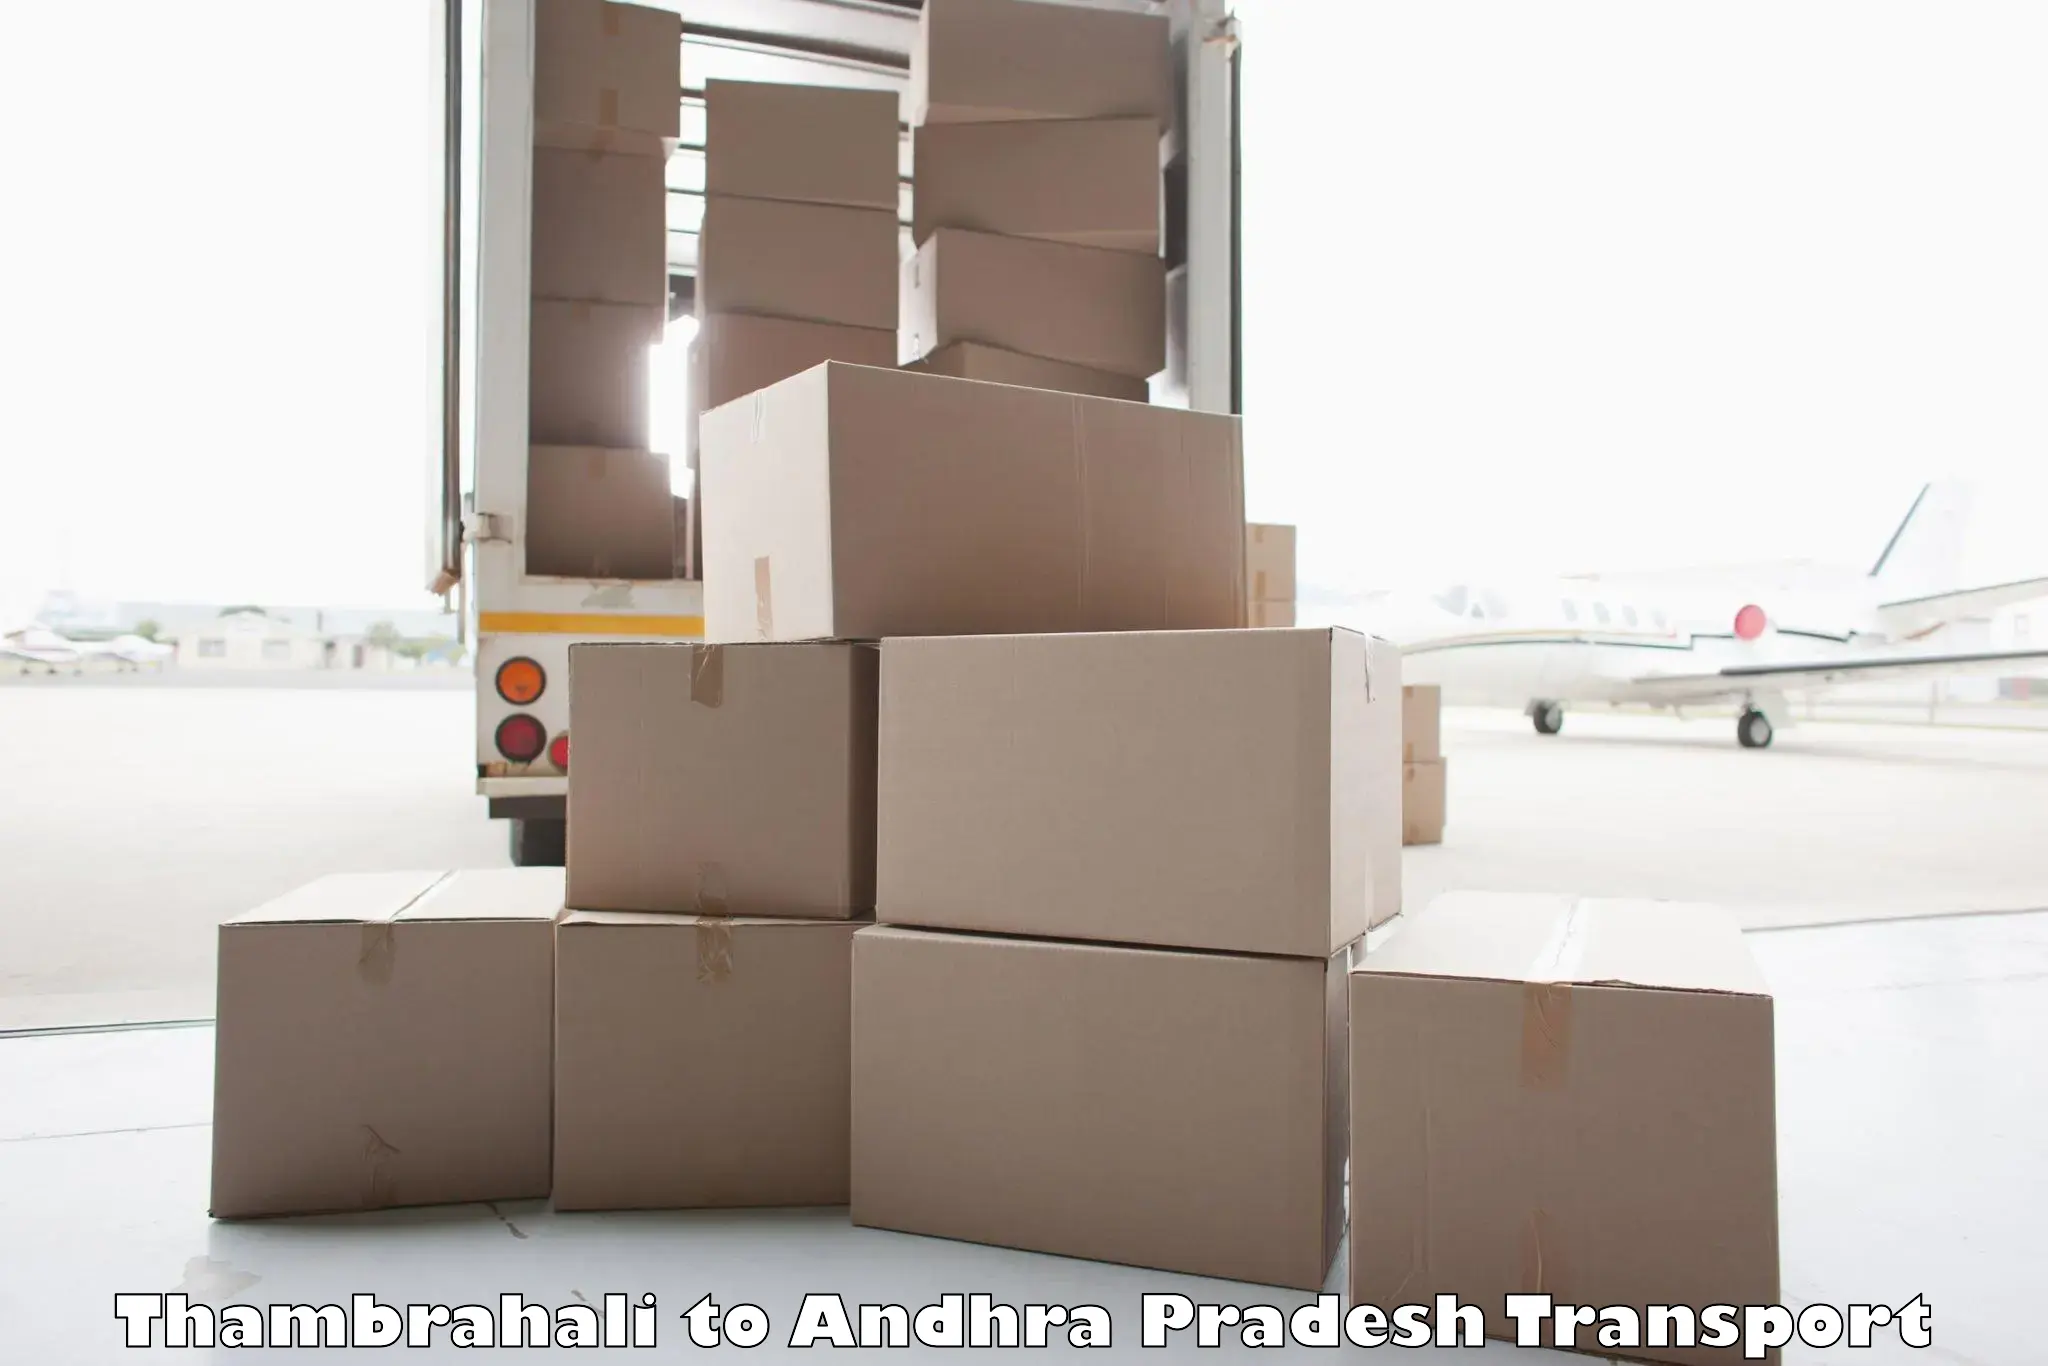 Delivery service Thambrahali to Andhra Pradesh